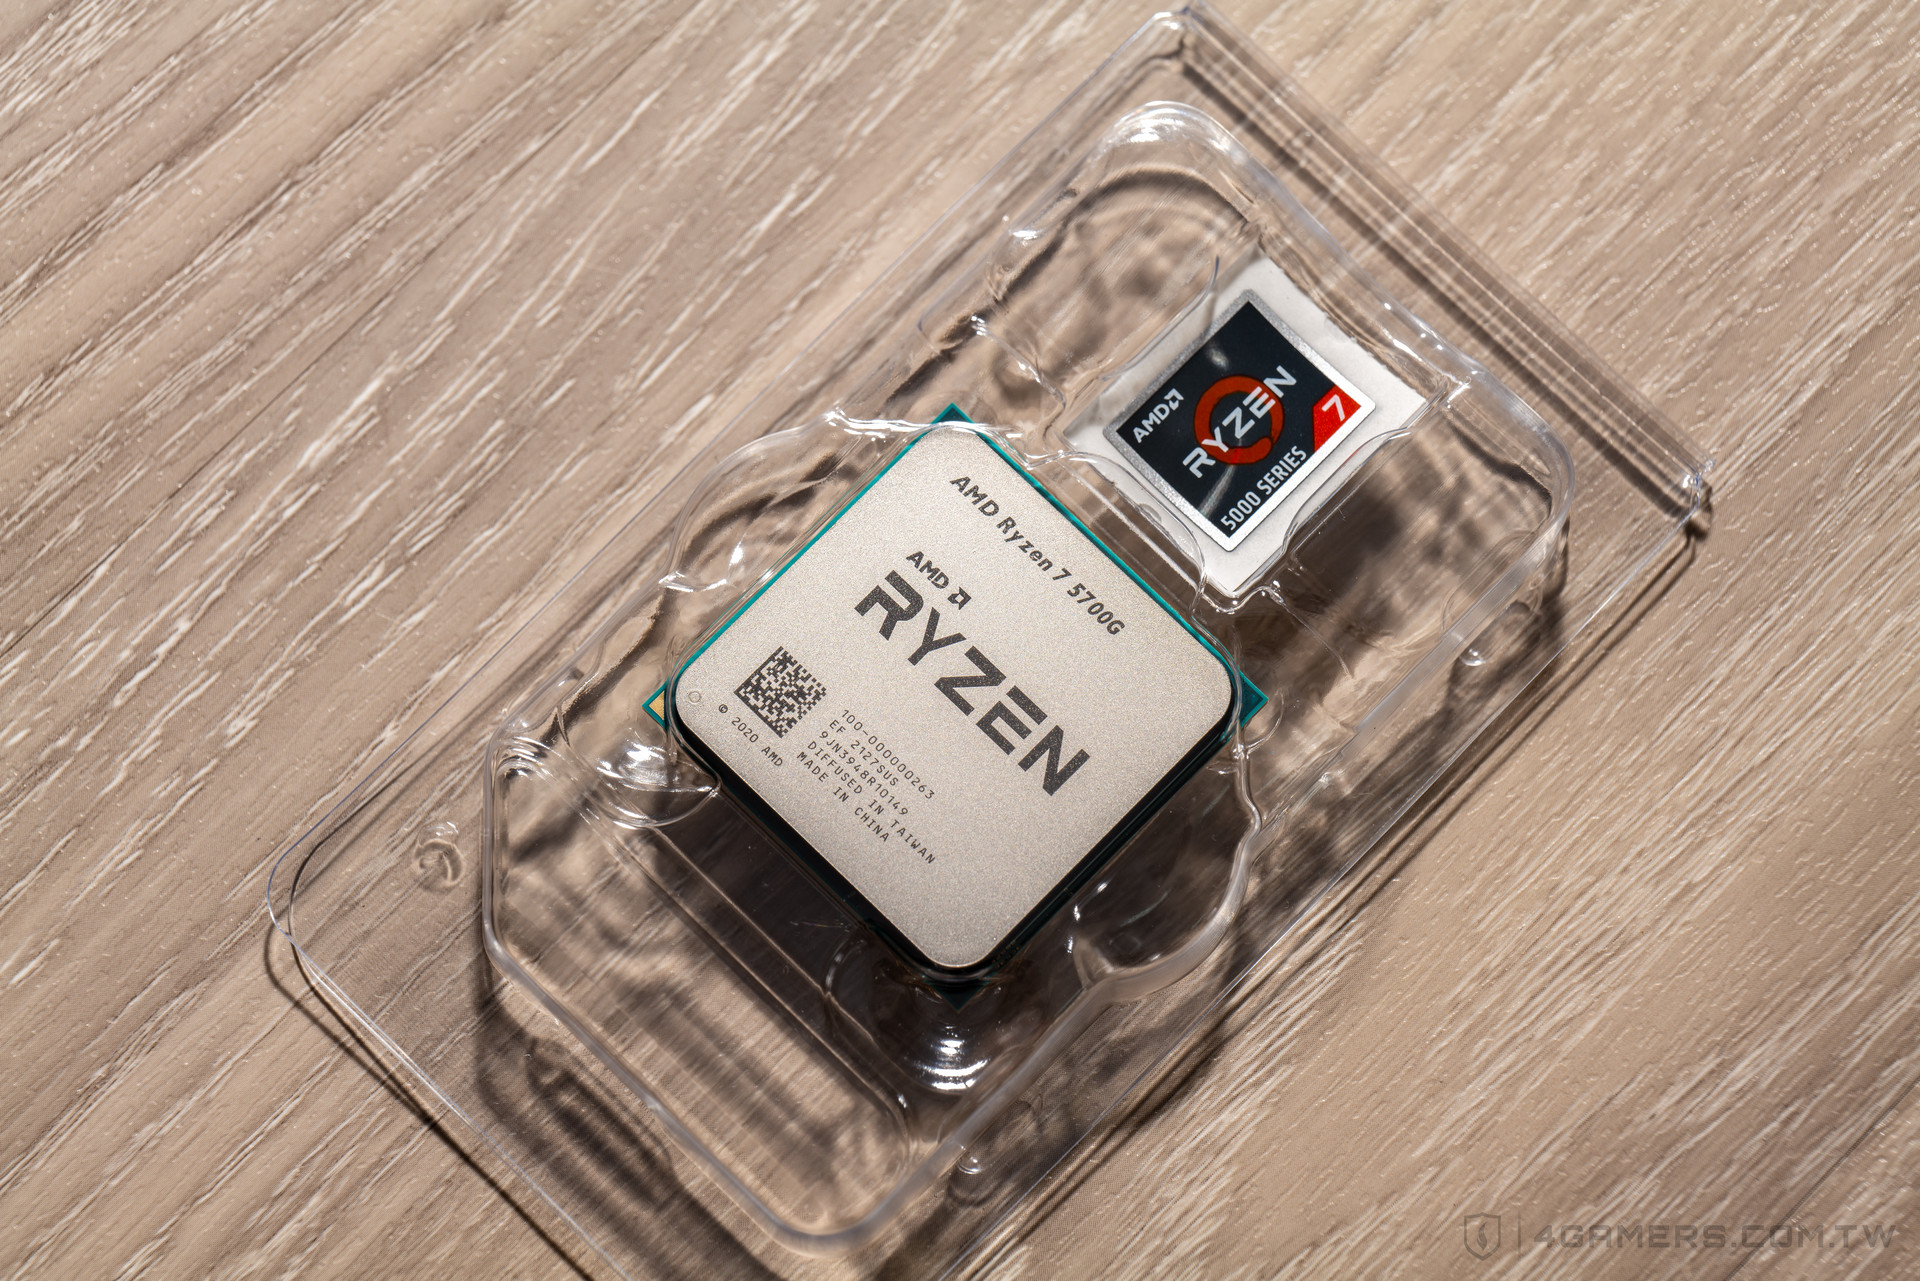 AMD Ryzen 7 5700G評測：擁有地表最強內顯的8核Zen3處理器| 4Gamers